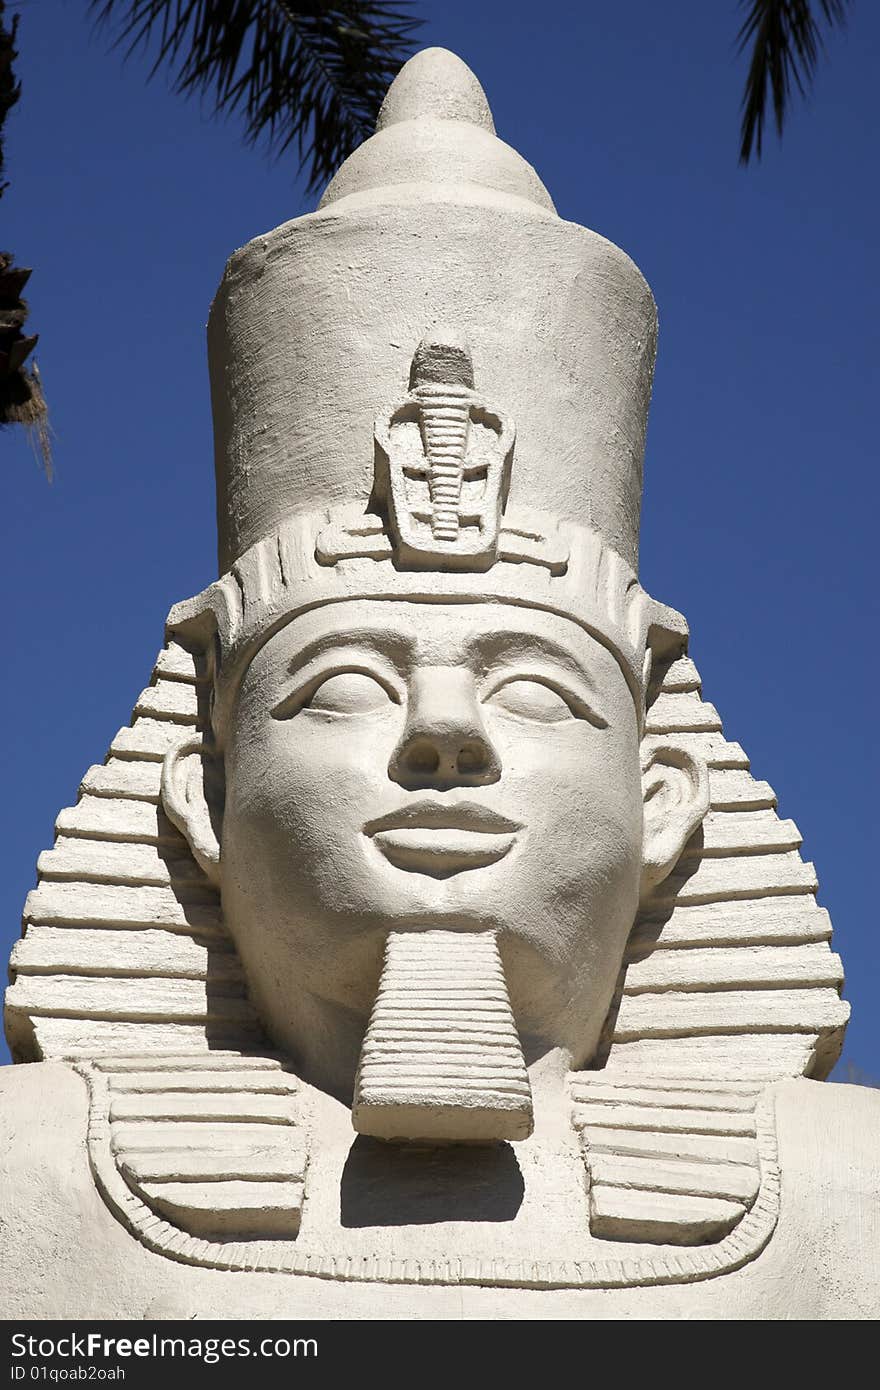 Replica statue of ramses II against a blue sky